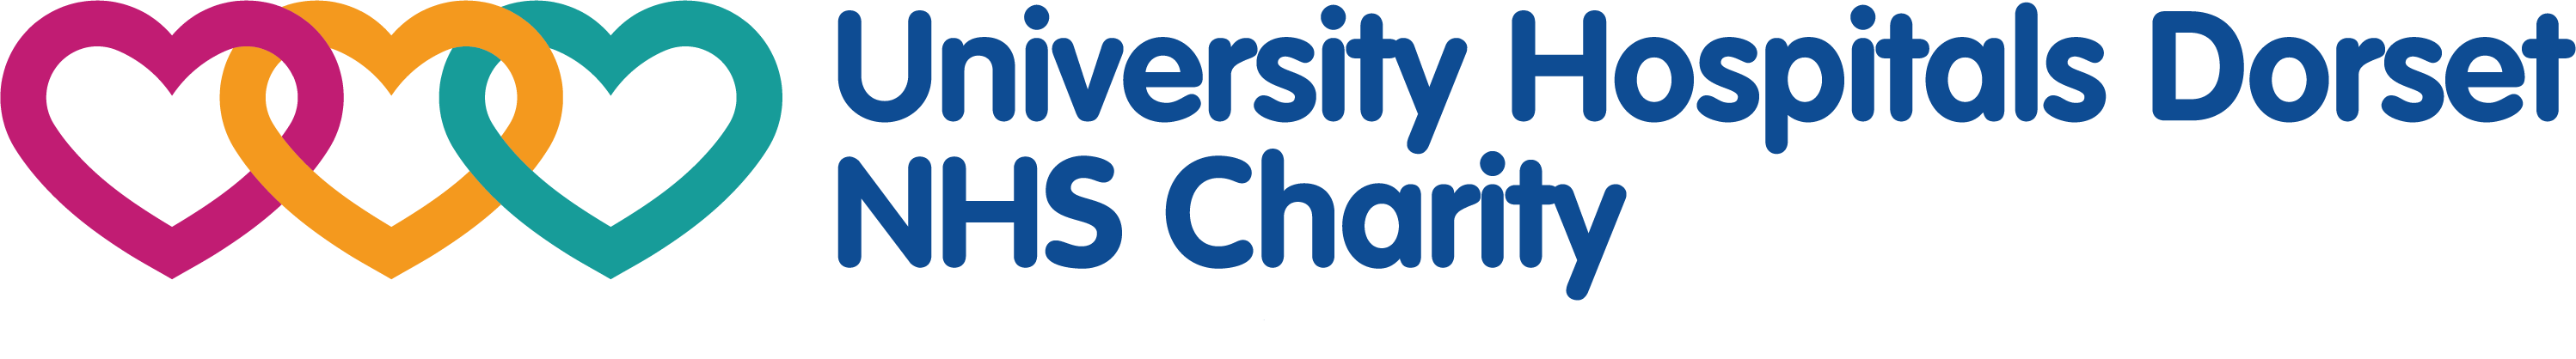 UHD Charity Logo large